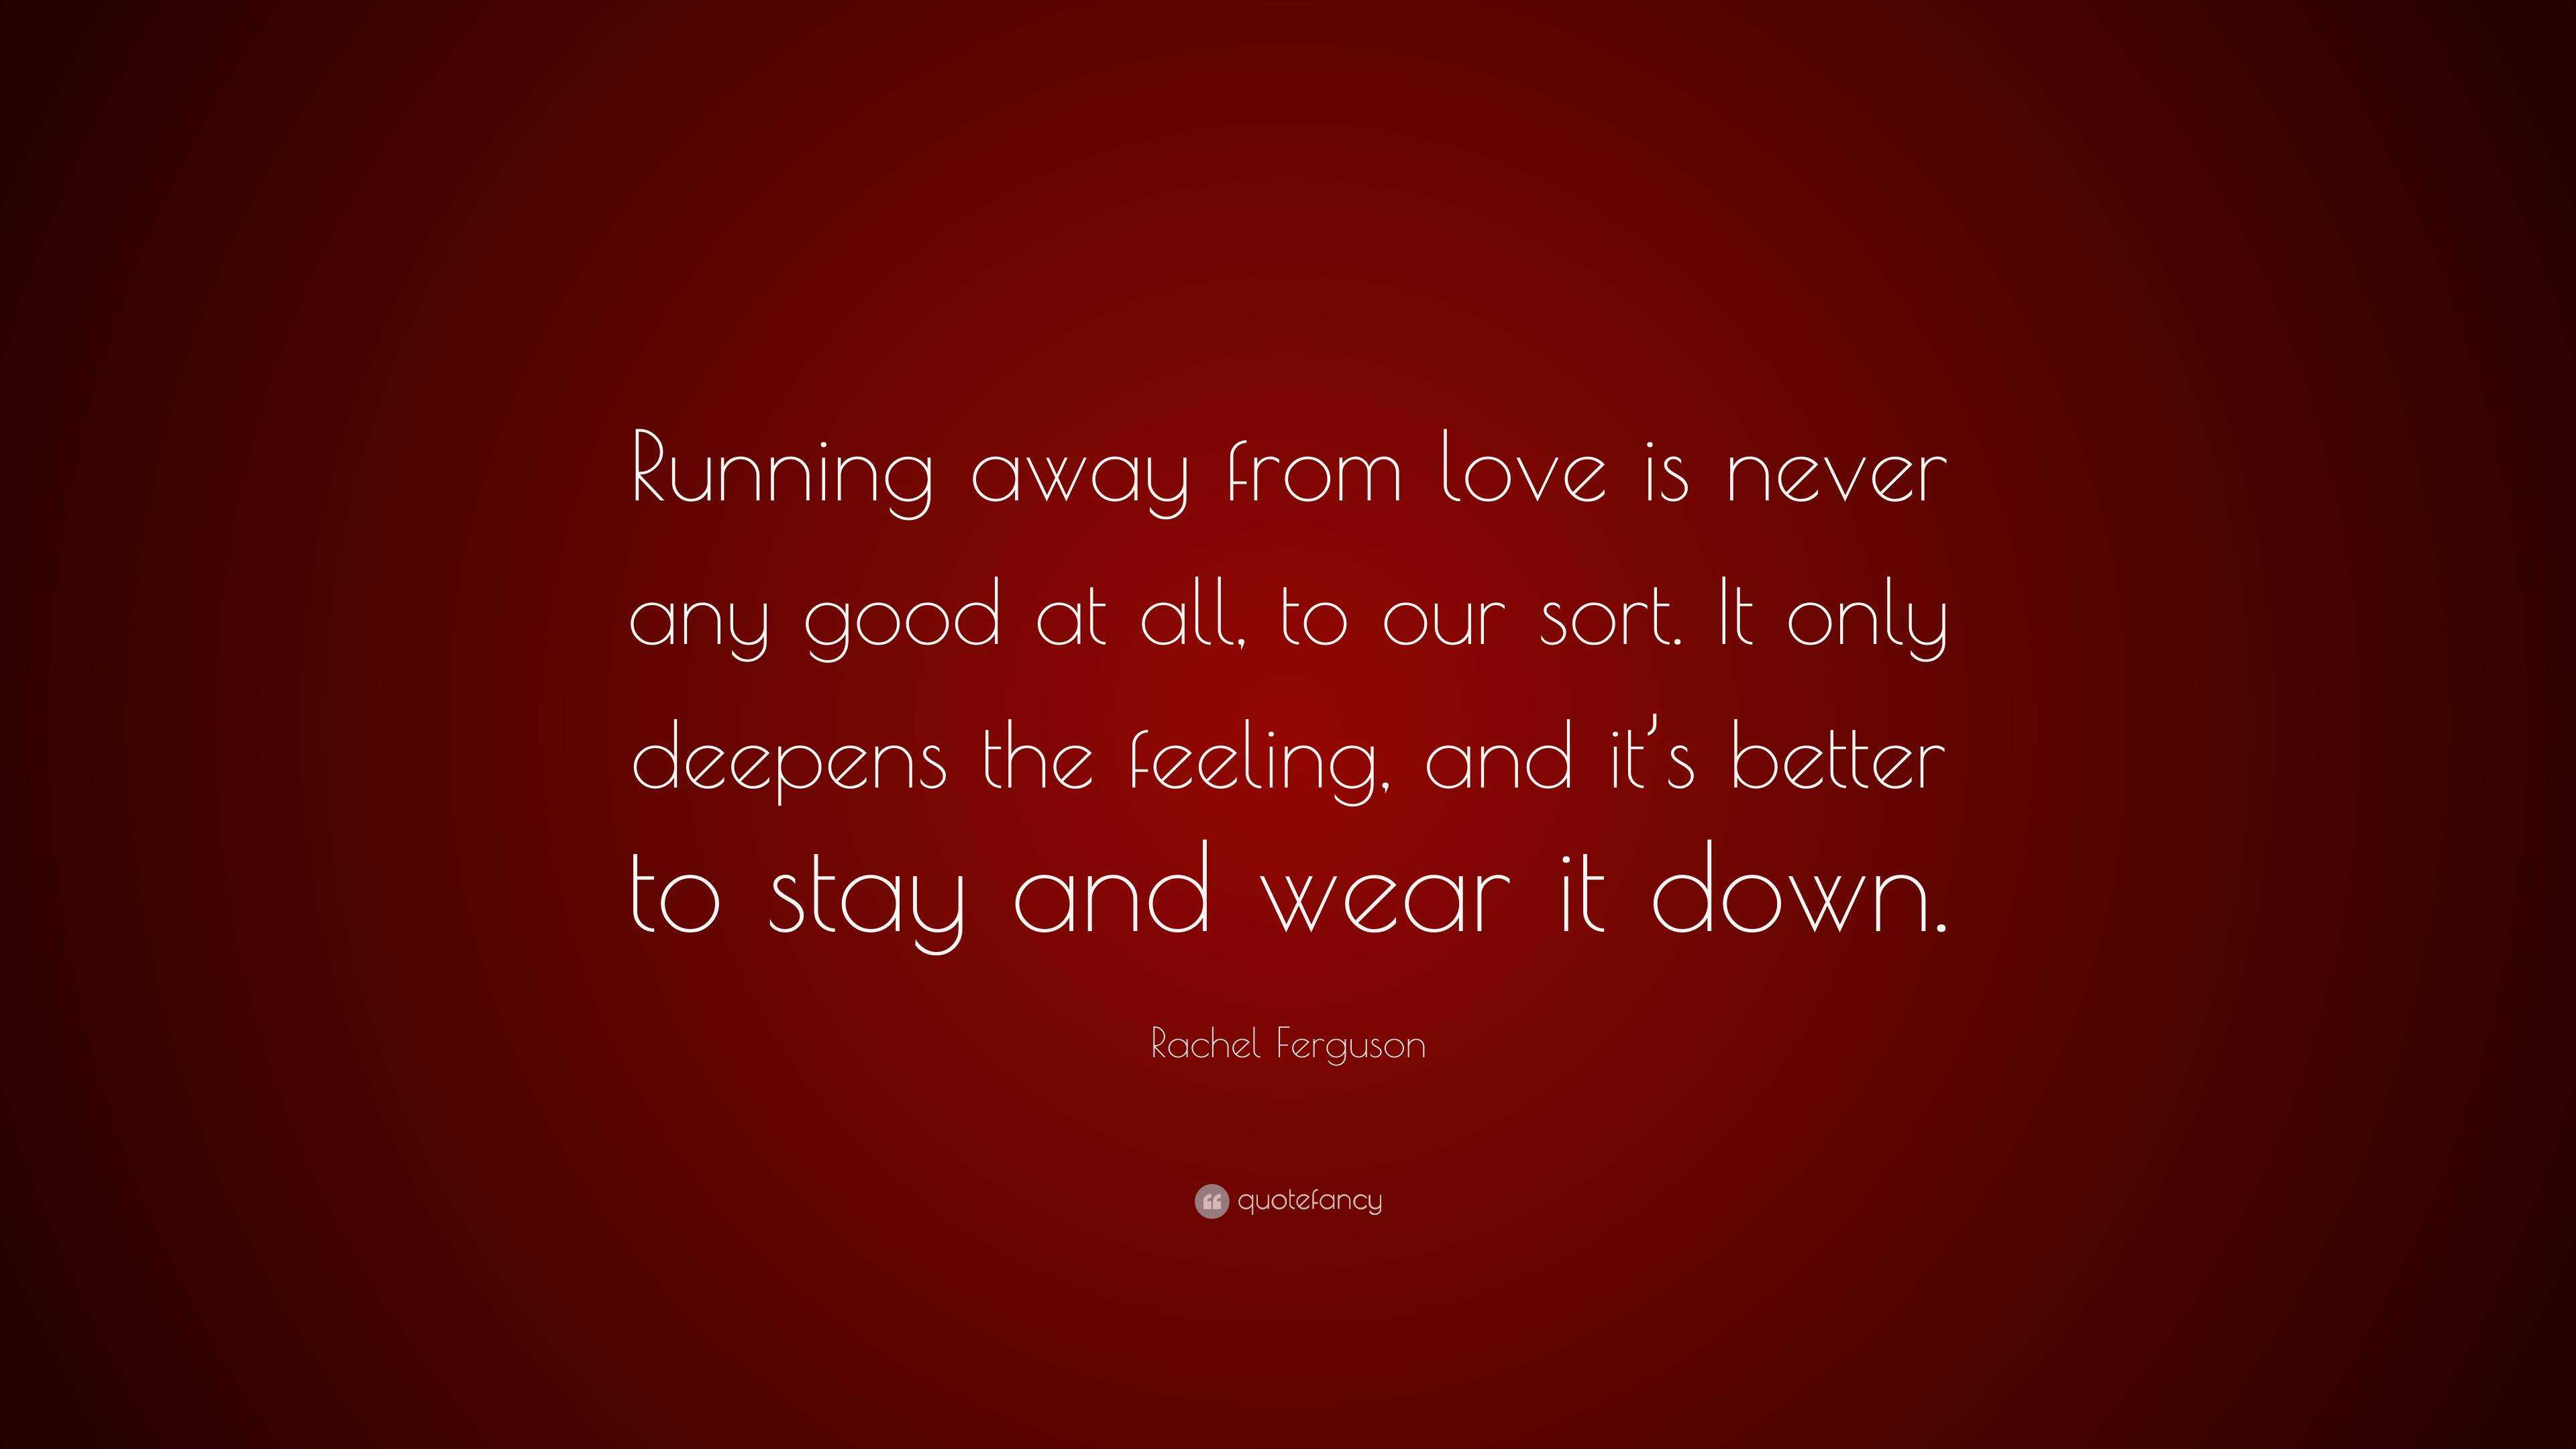 Love Running